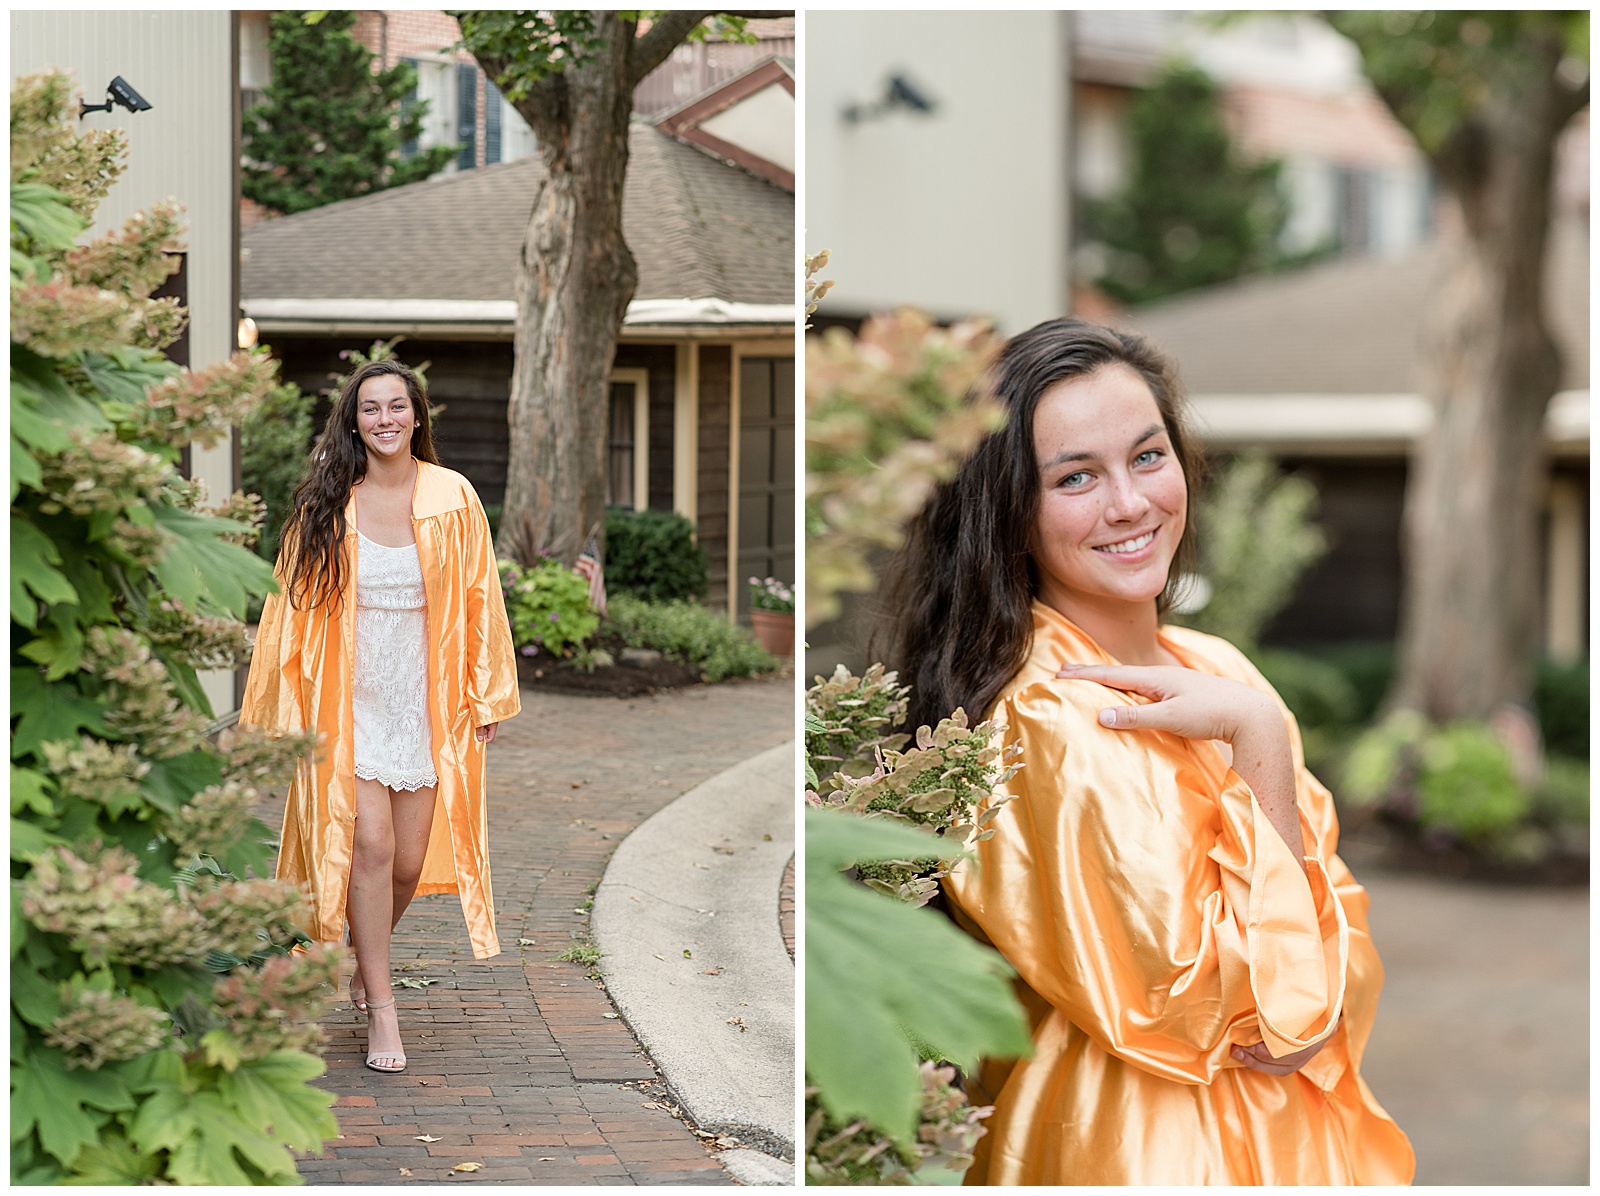 senior girl in yellow graduation gown walking towards camera along brick sidewalk smiling next to green bush